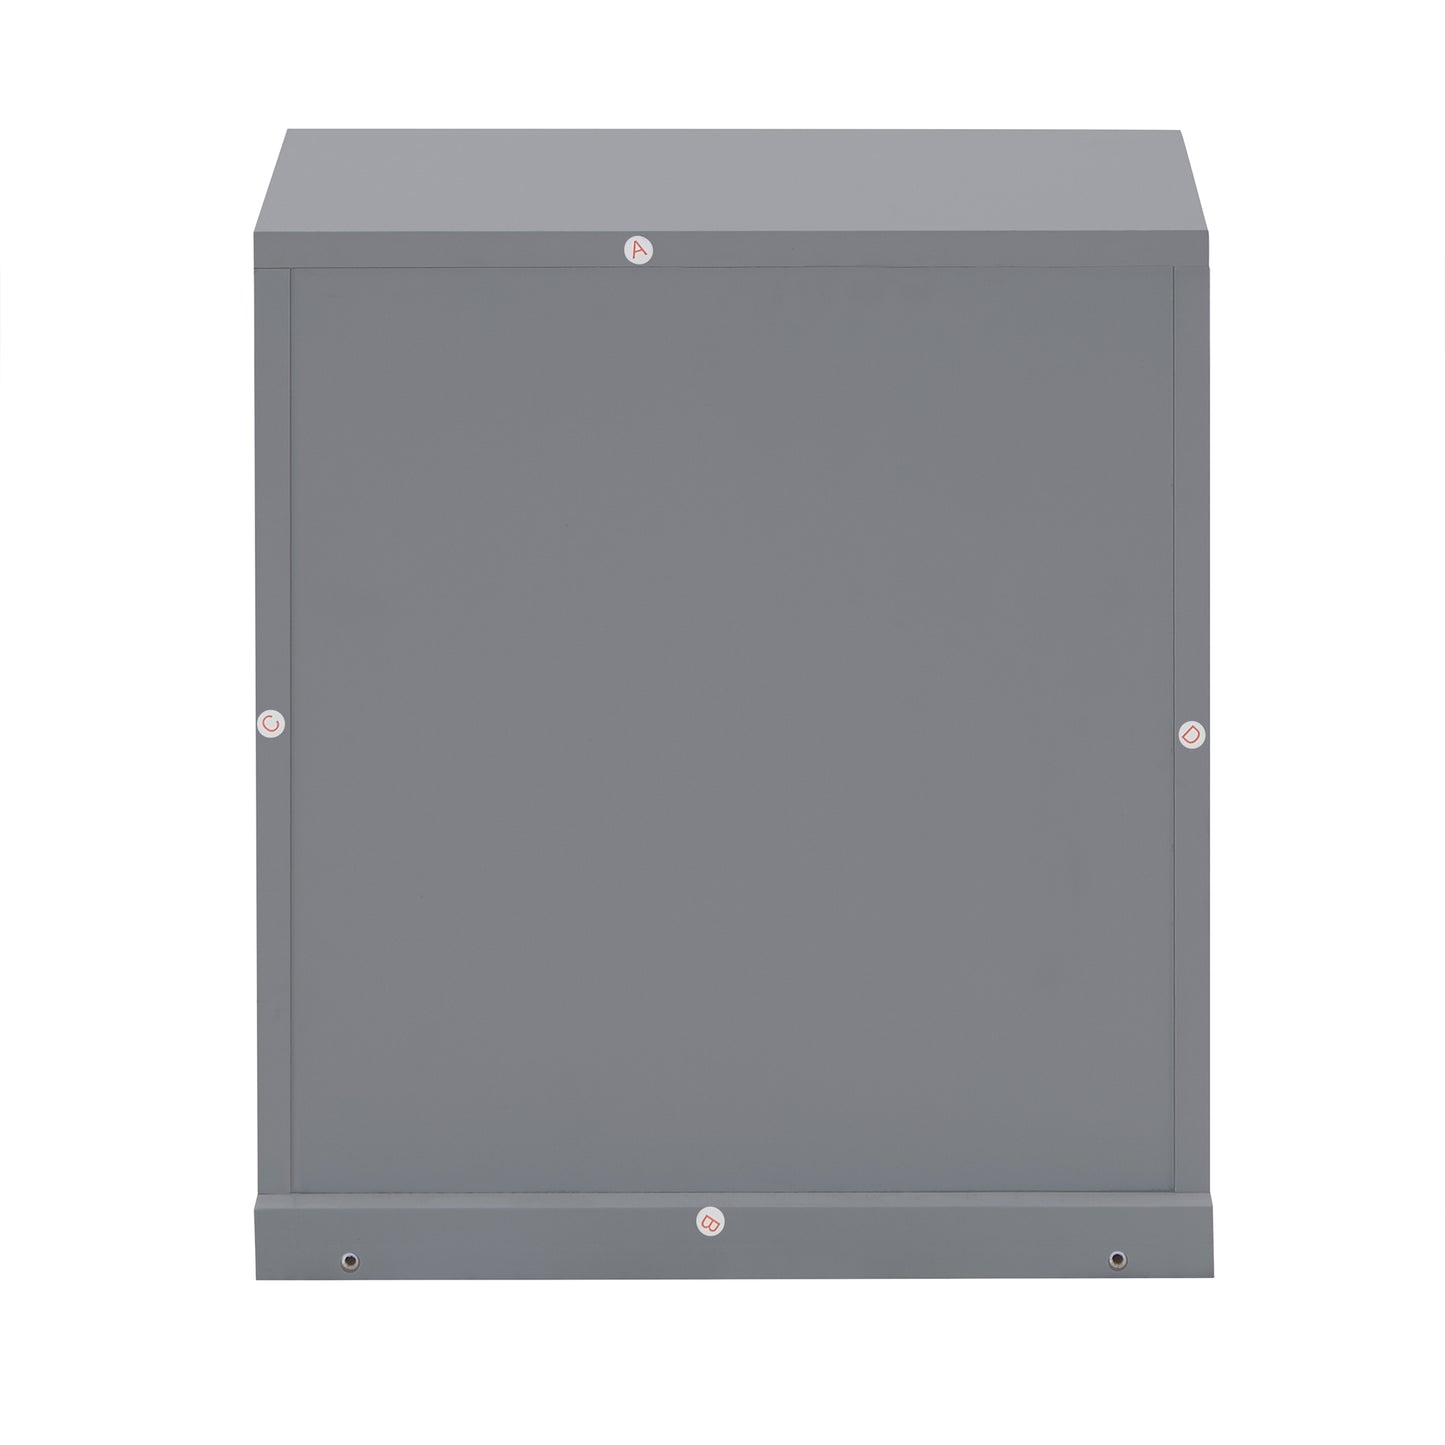 Modular Stacking Storage Bins - Frost Grey, 1 Box with Drawer